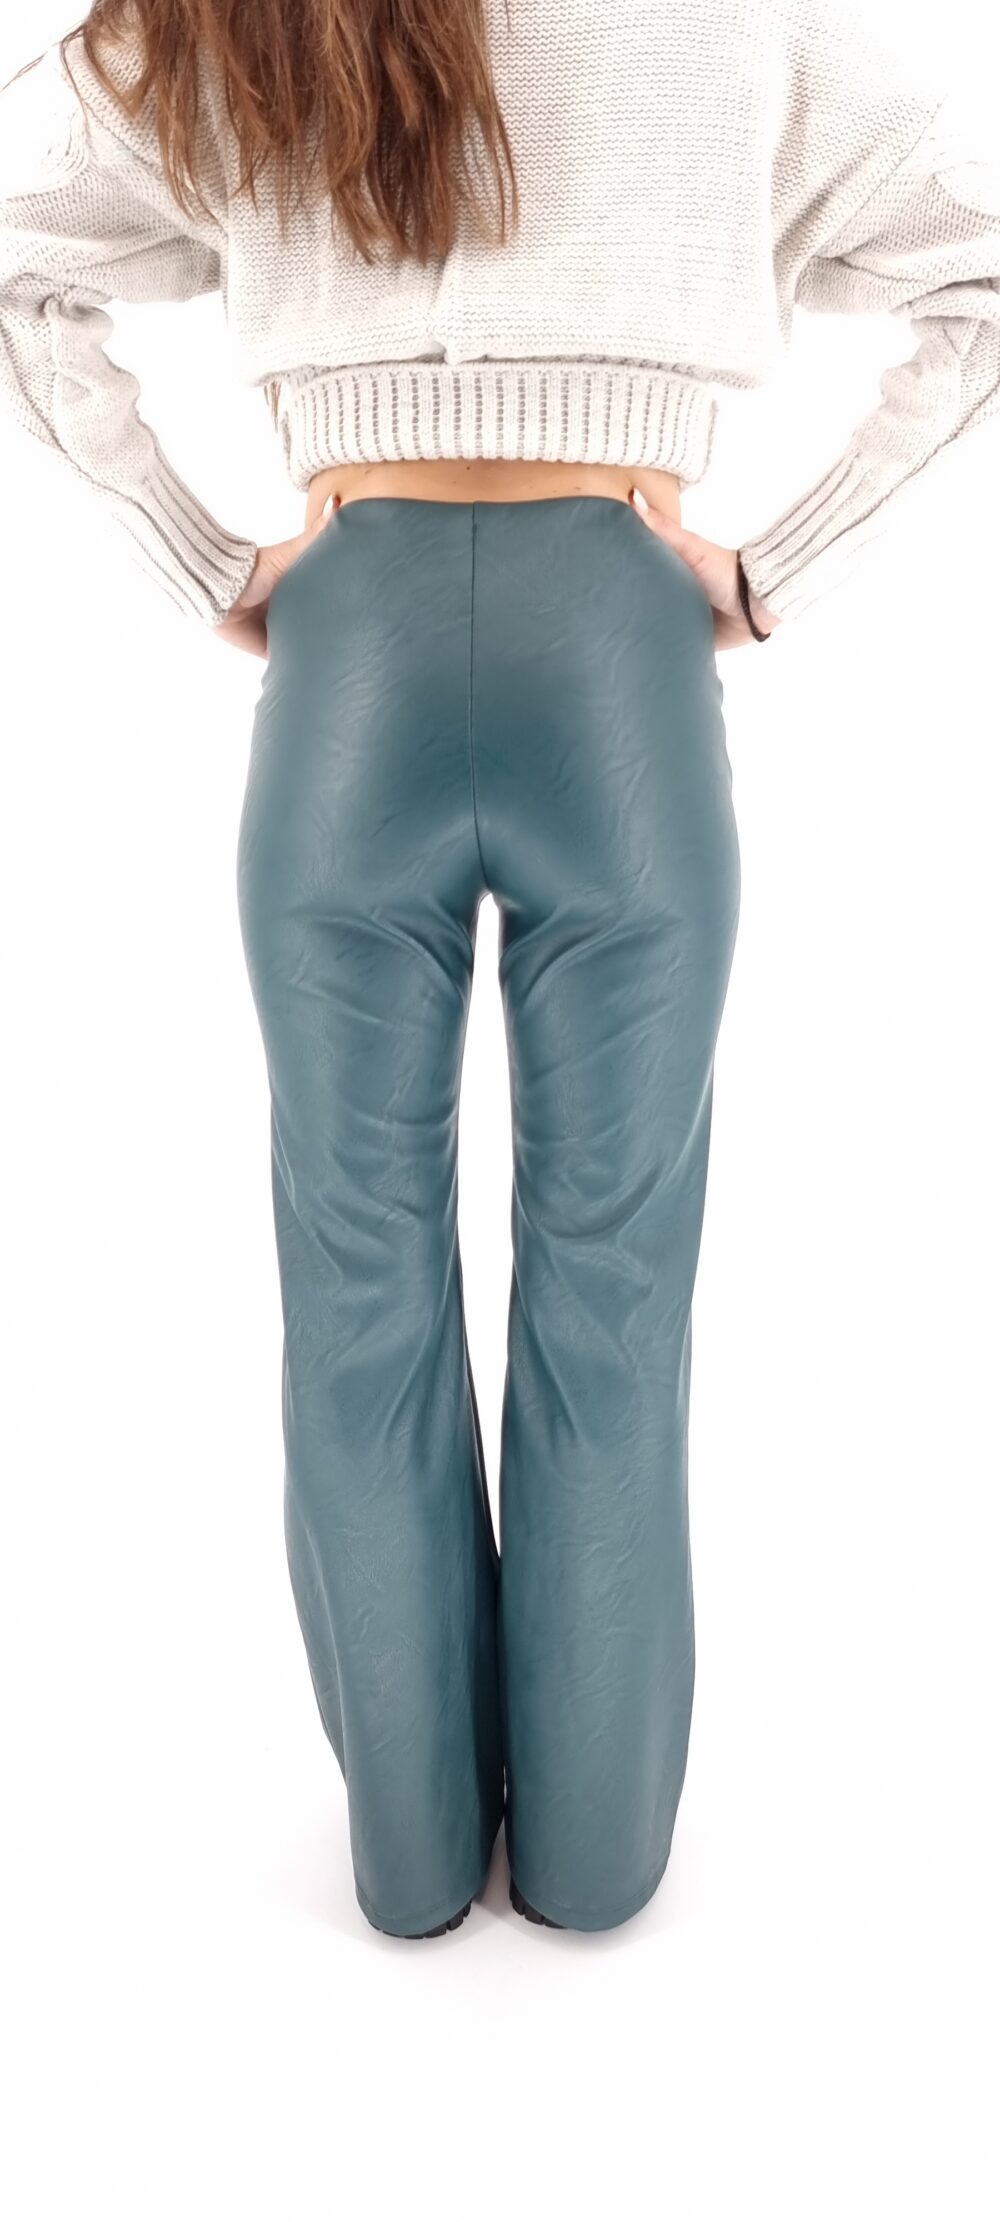 Green bell-bottom pants